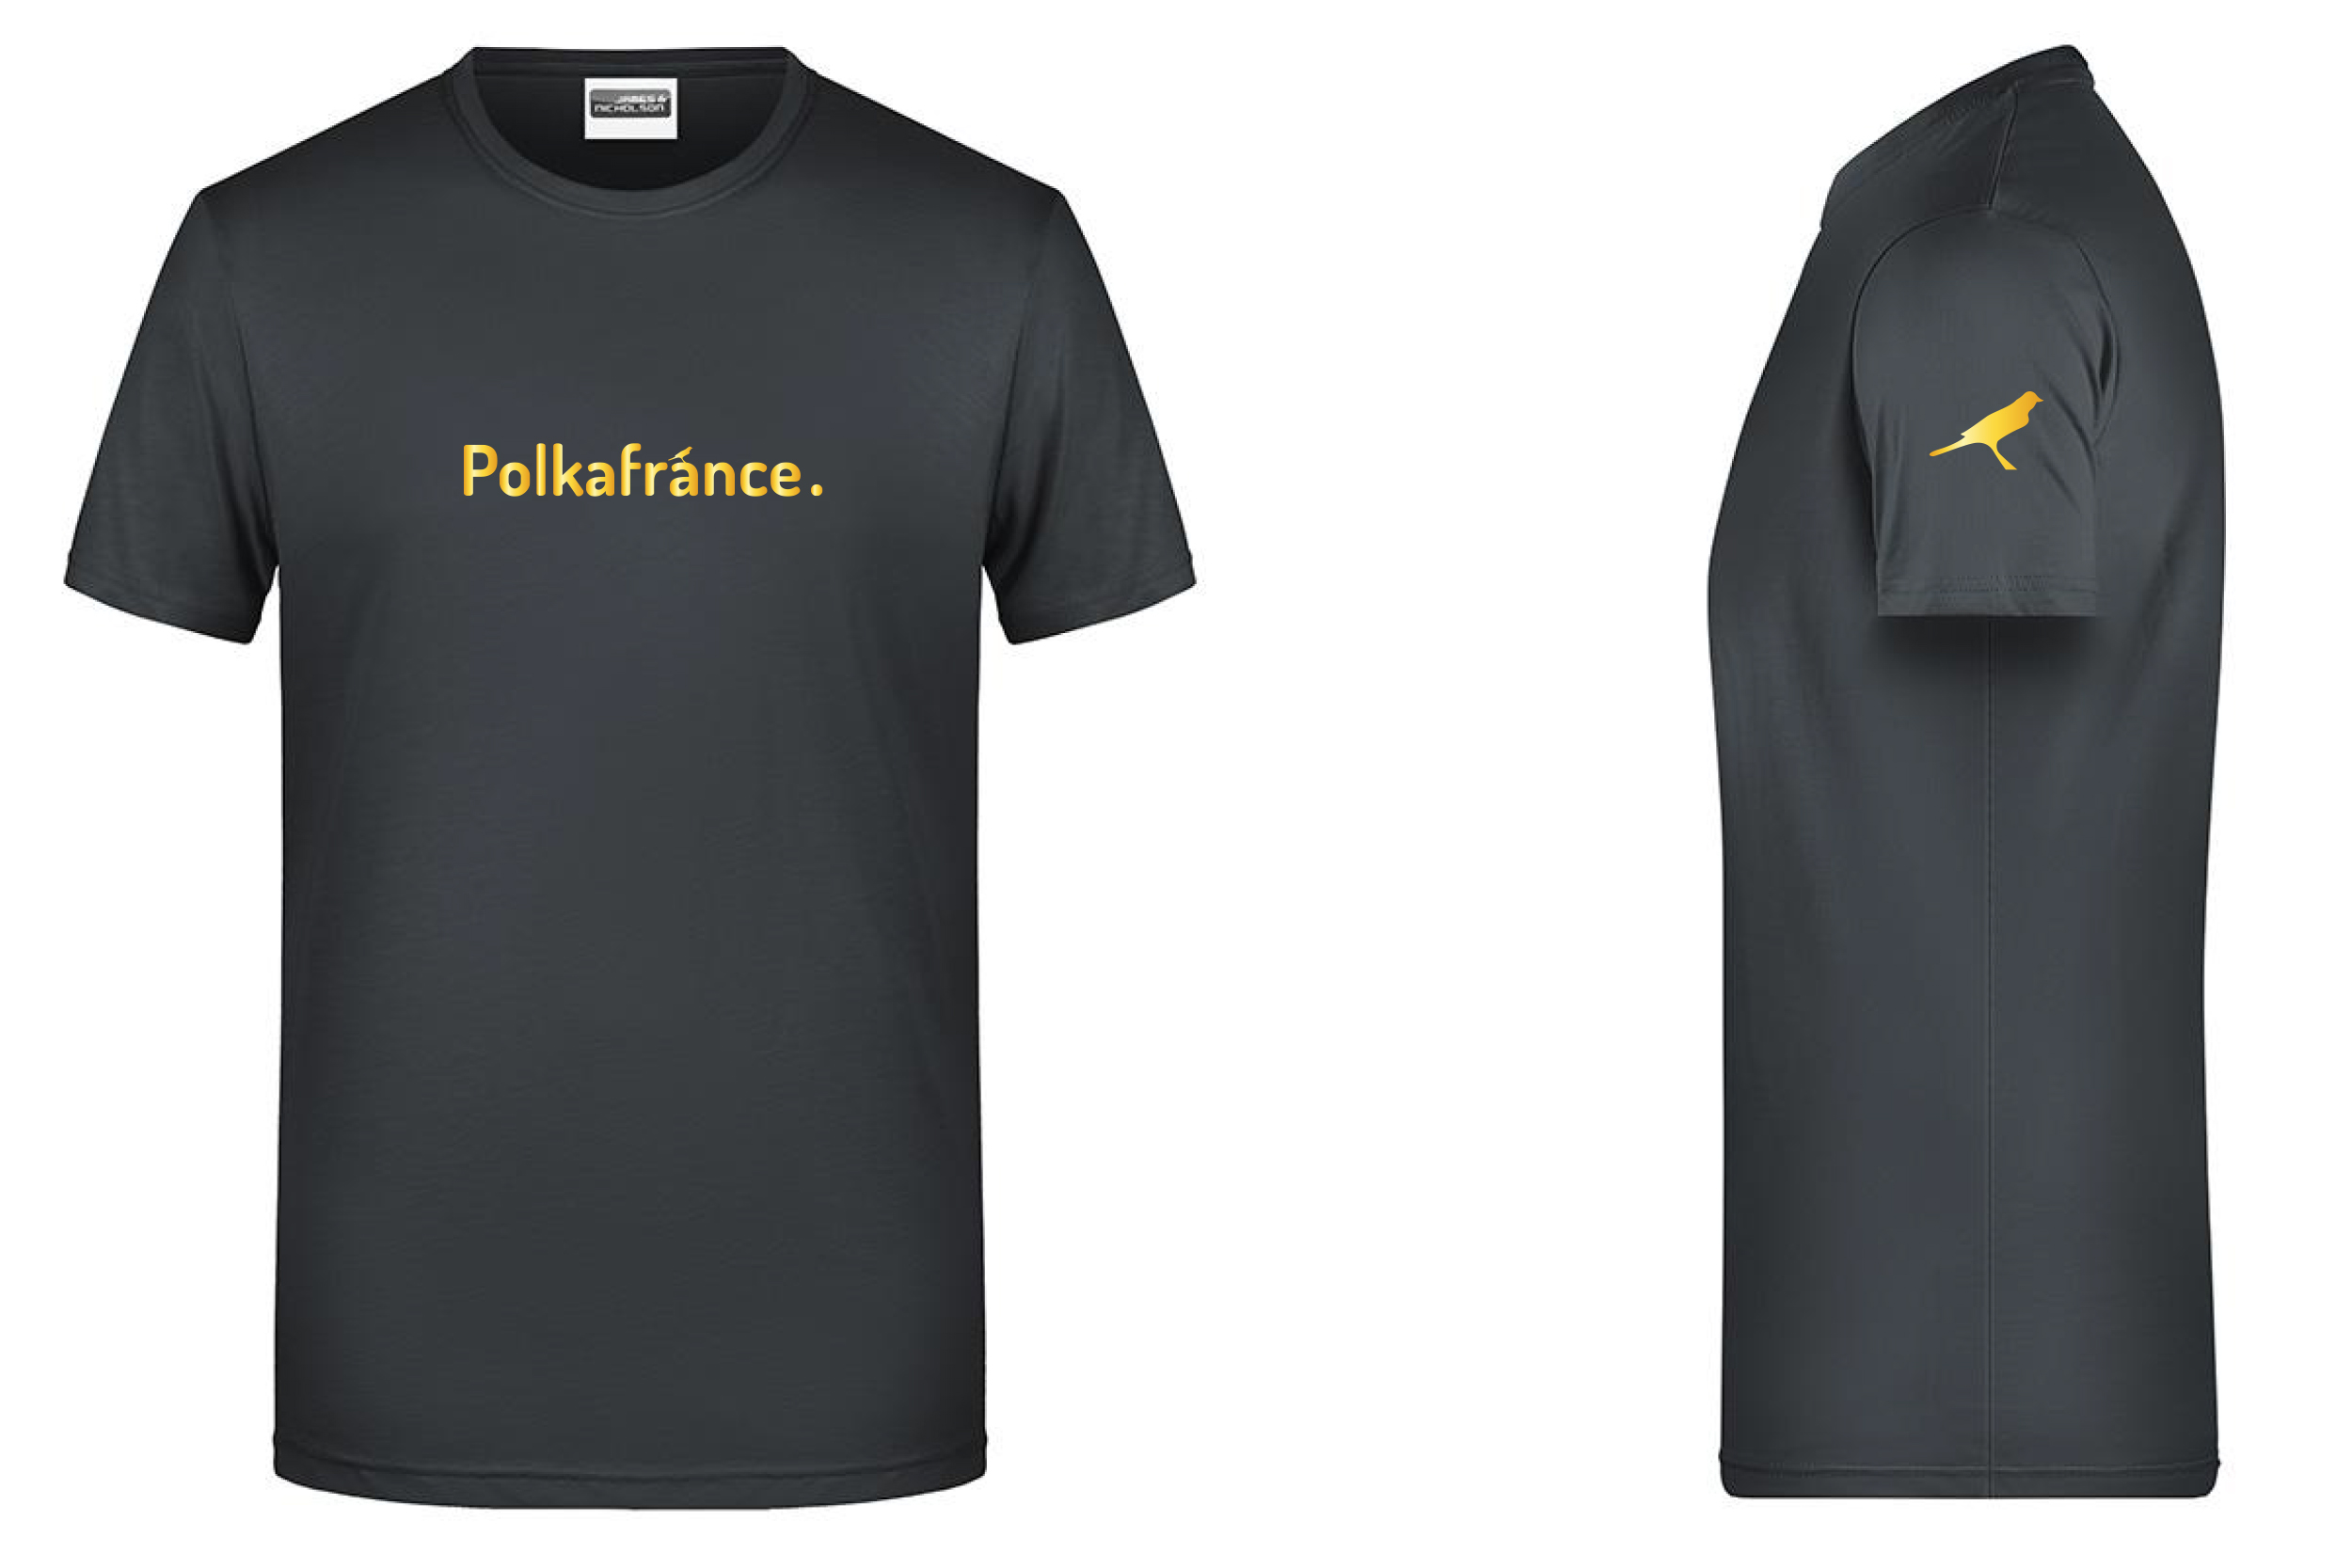 Tee Shirt Polkafrance Gold